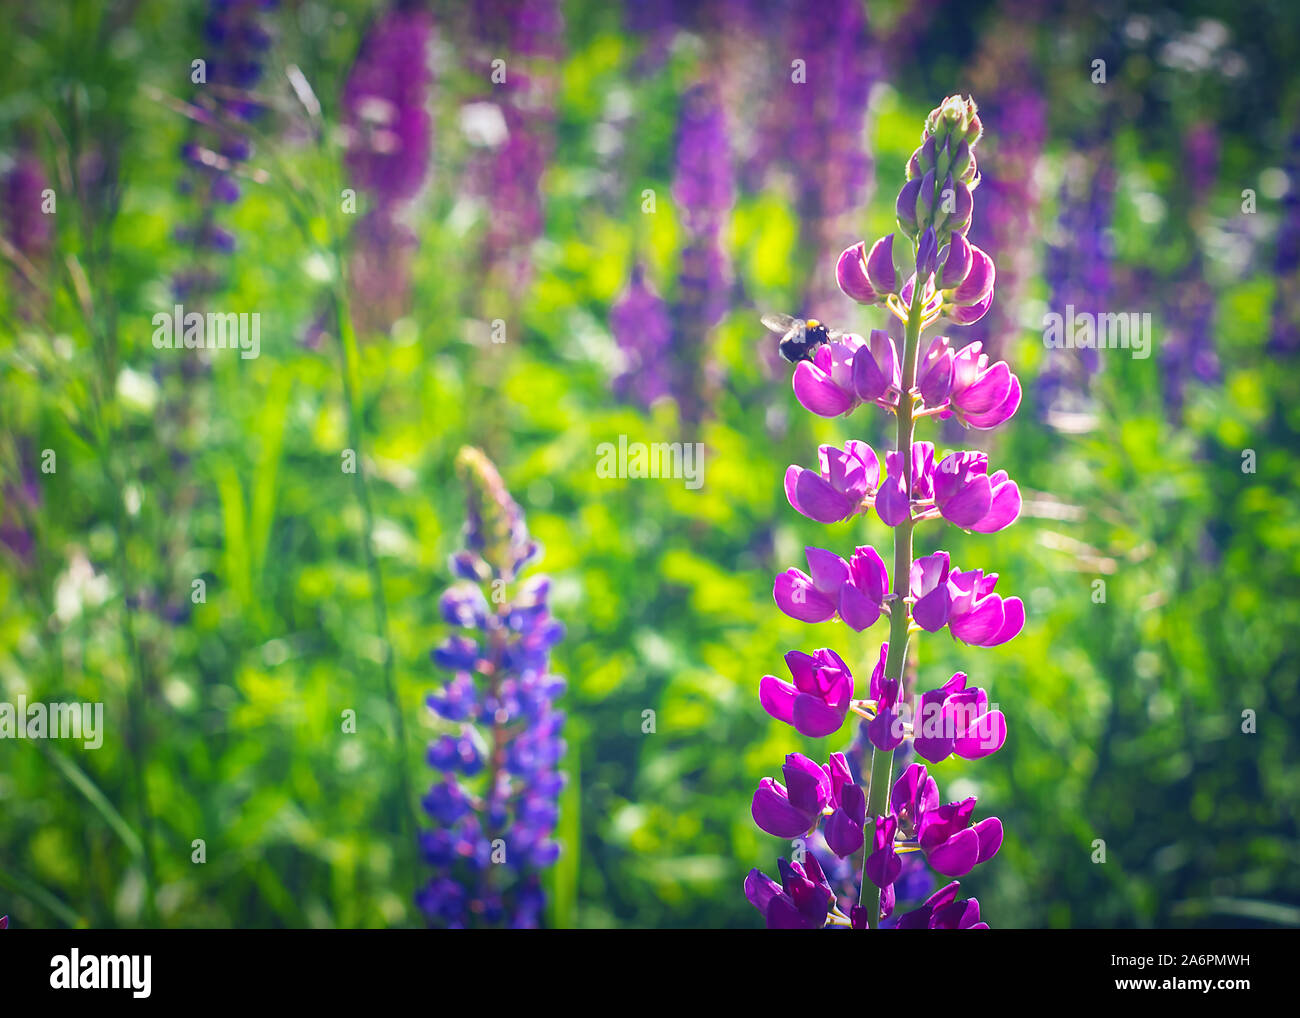 Bumblebee en flores de color púrpura o Willowherb Fireweed, Chamaenerion Angustifolium, en un día soleado de verano. Concepto de polinización. Foto de stock